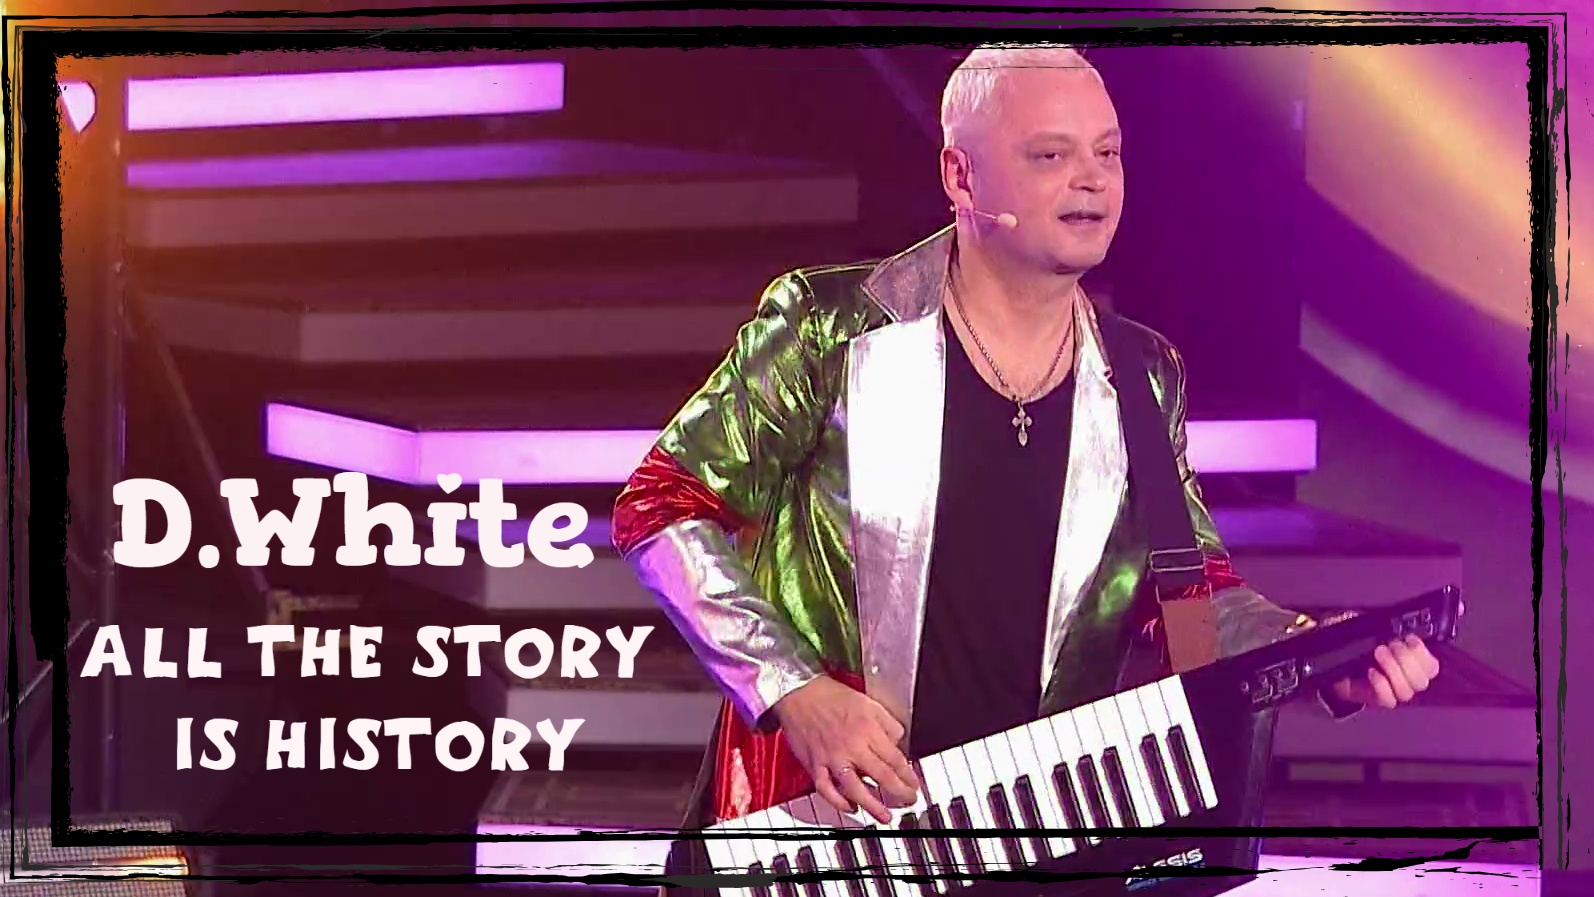 D.White - All the story is history (TV Version) в программе Андрея Малахова "Песни от всей души"